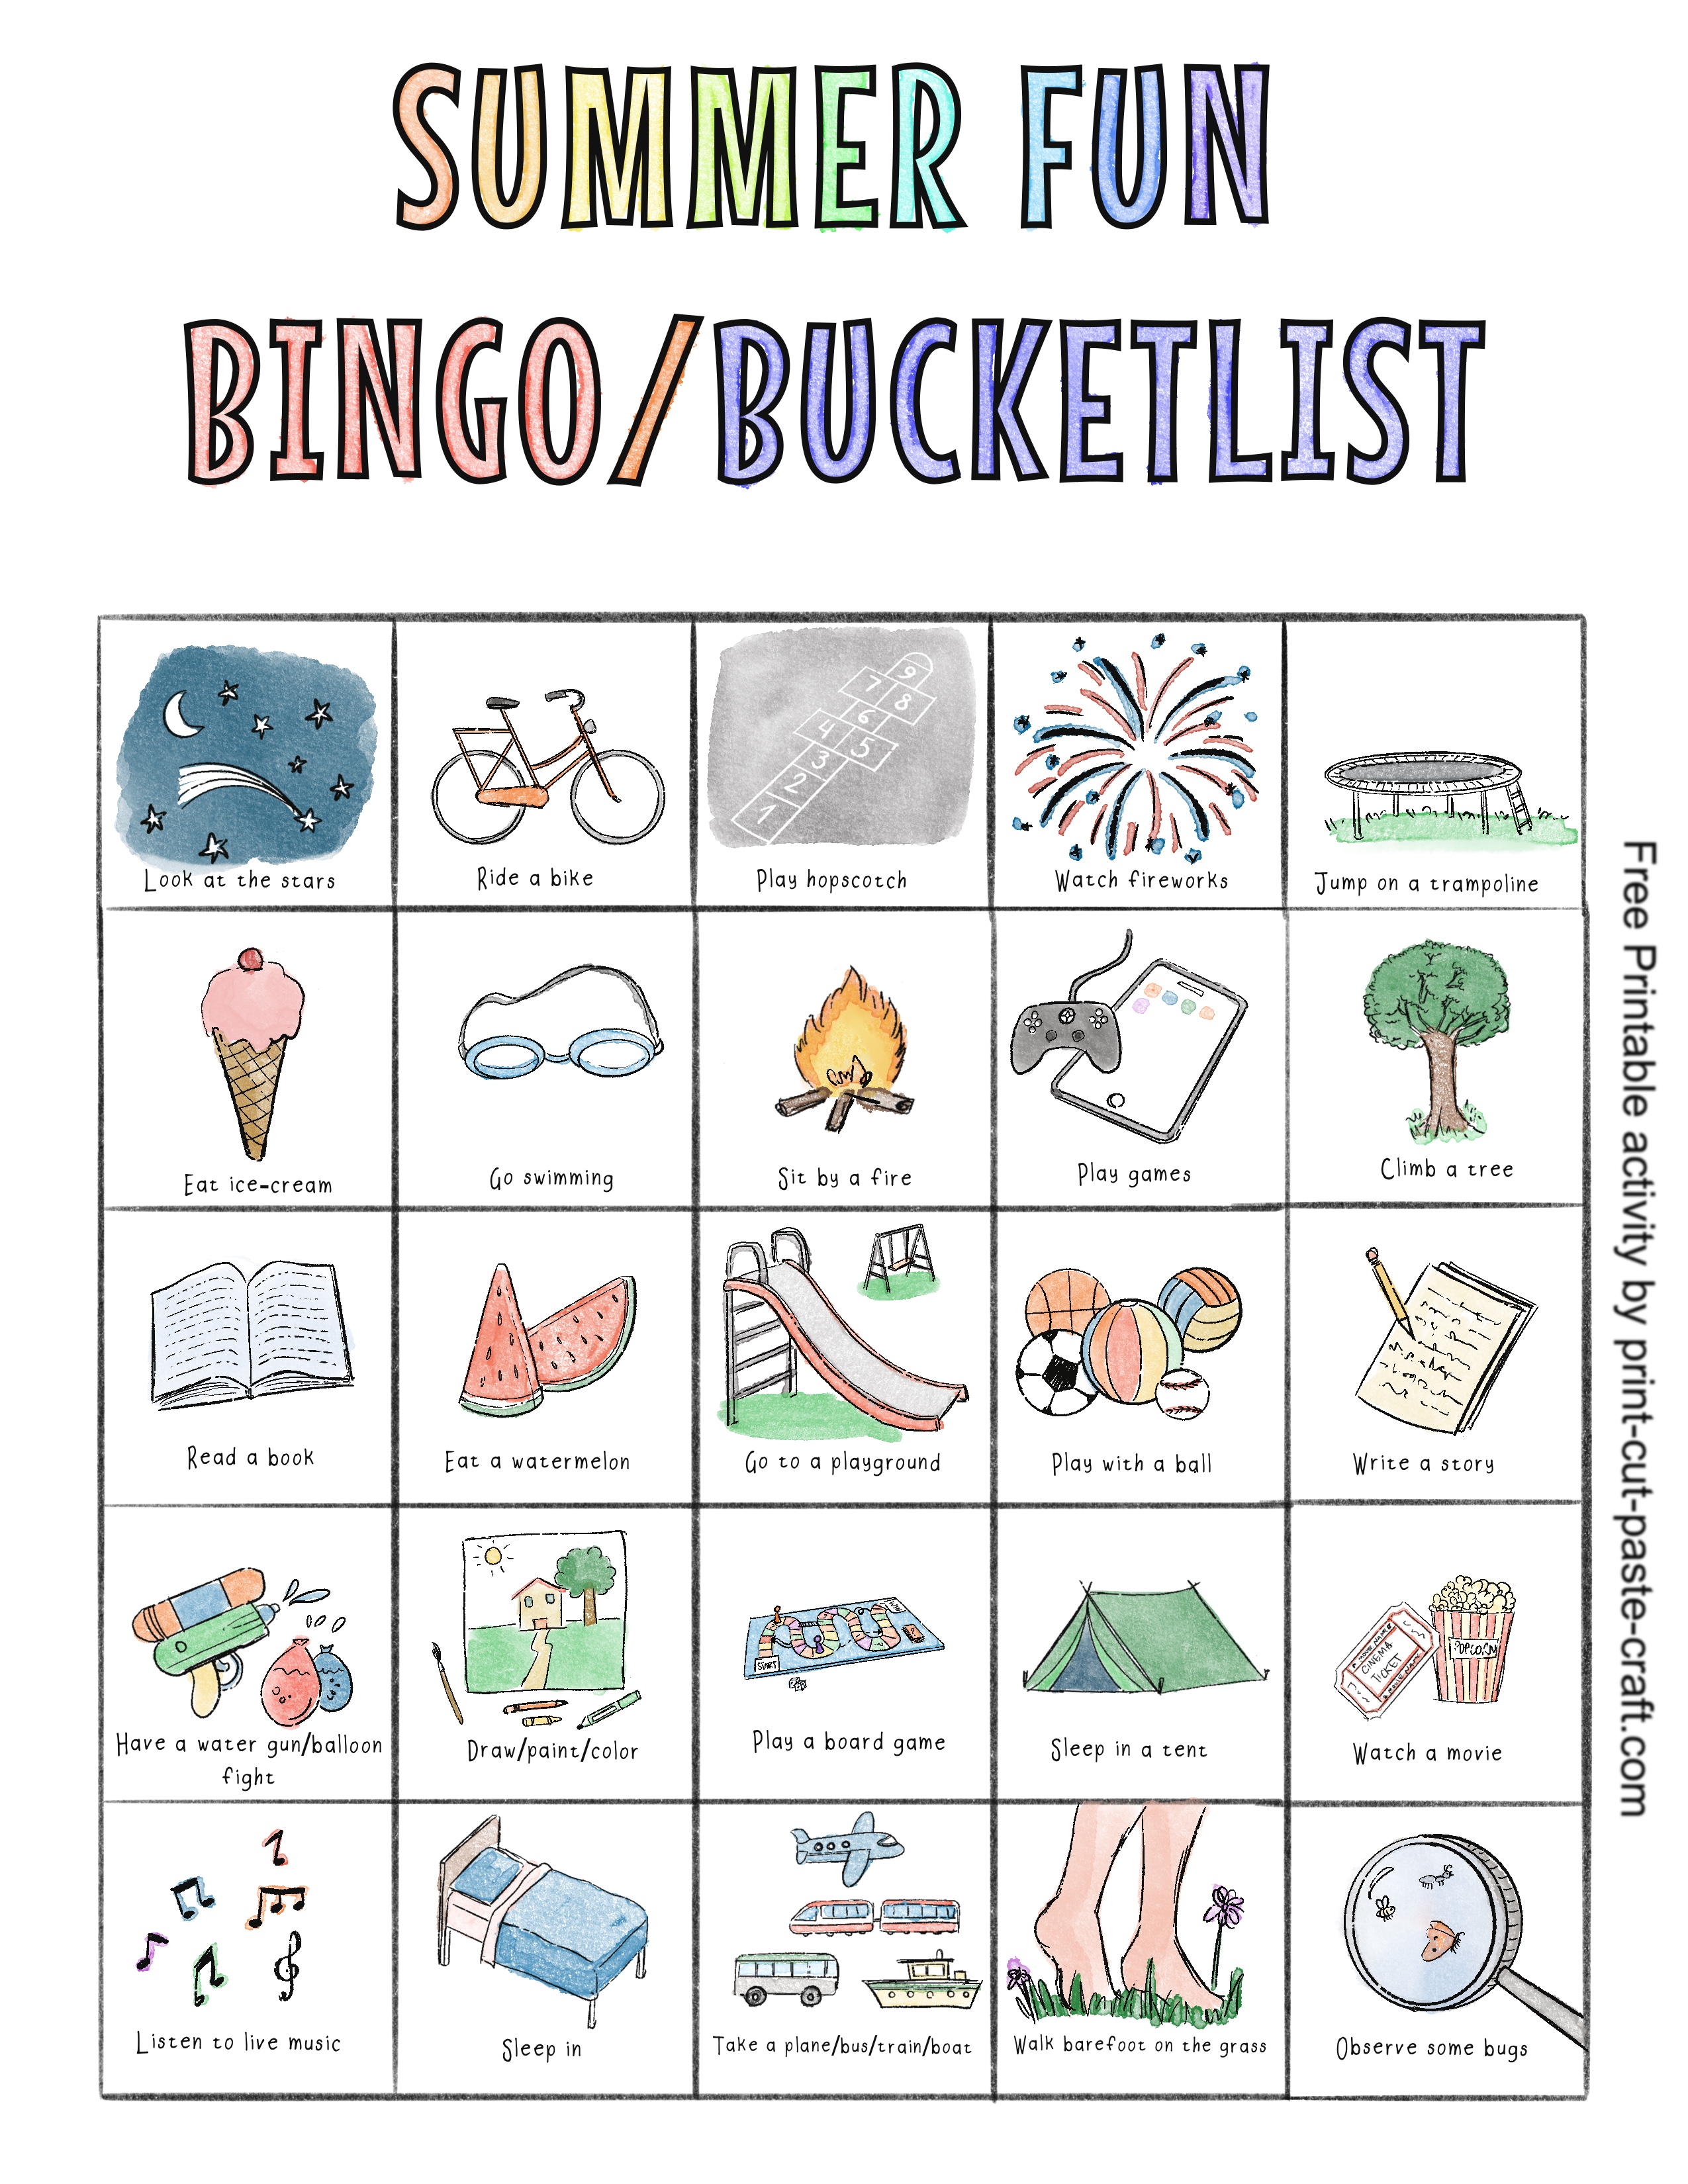 Summer bingo bucket list free printable activity